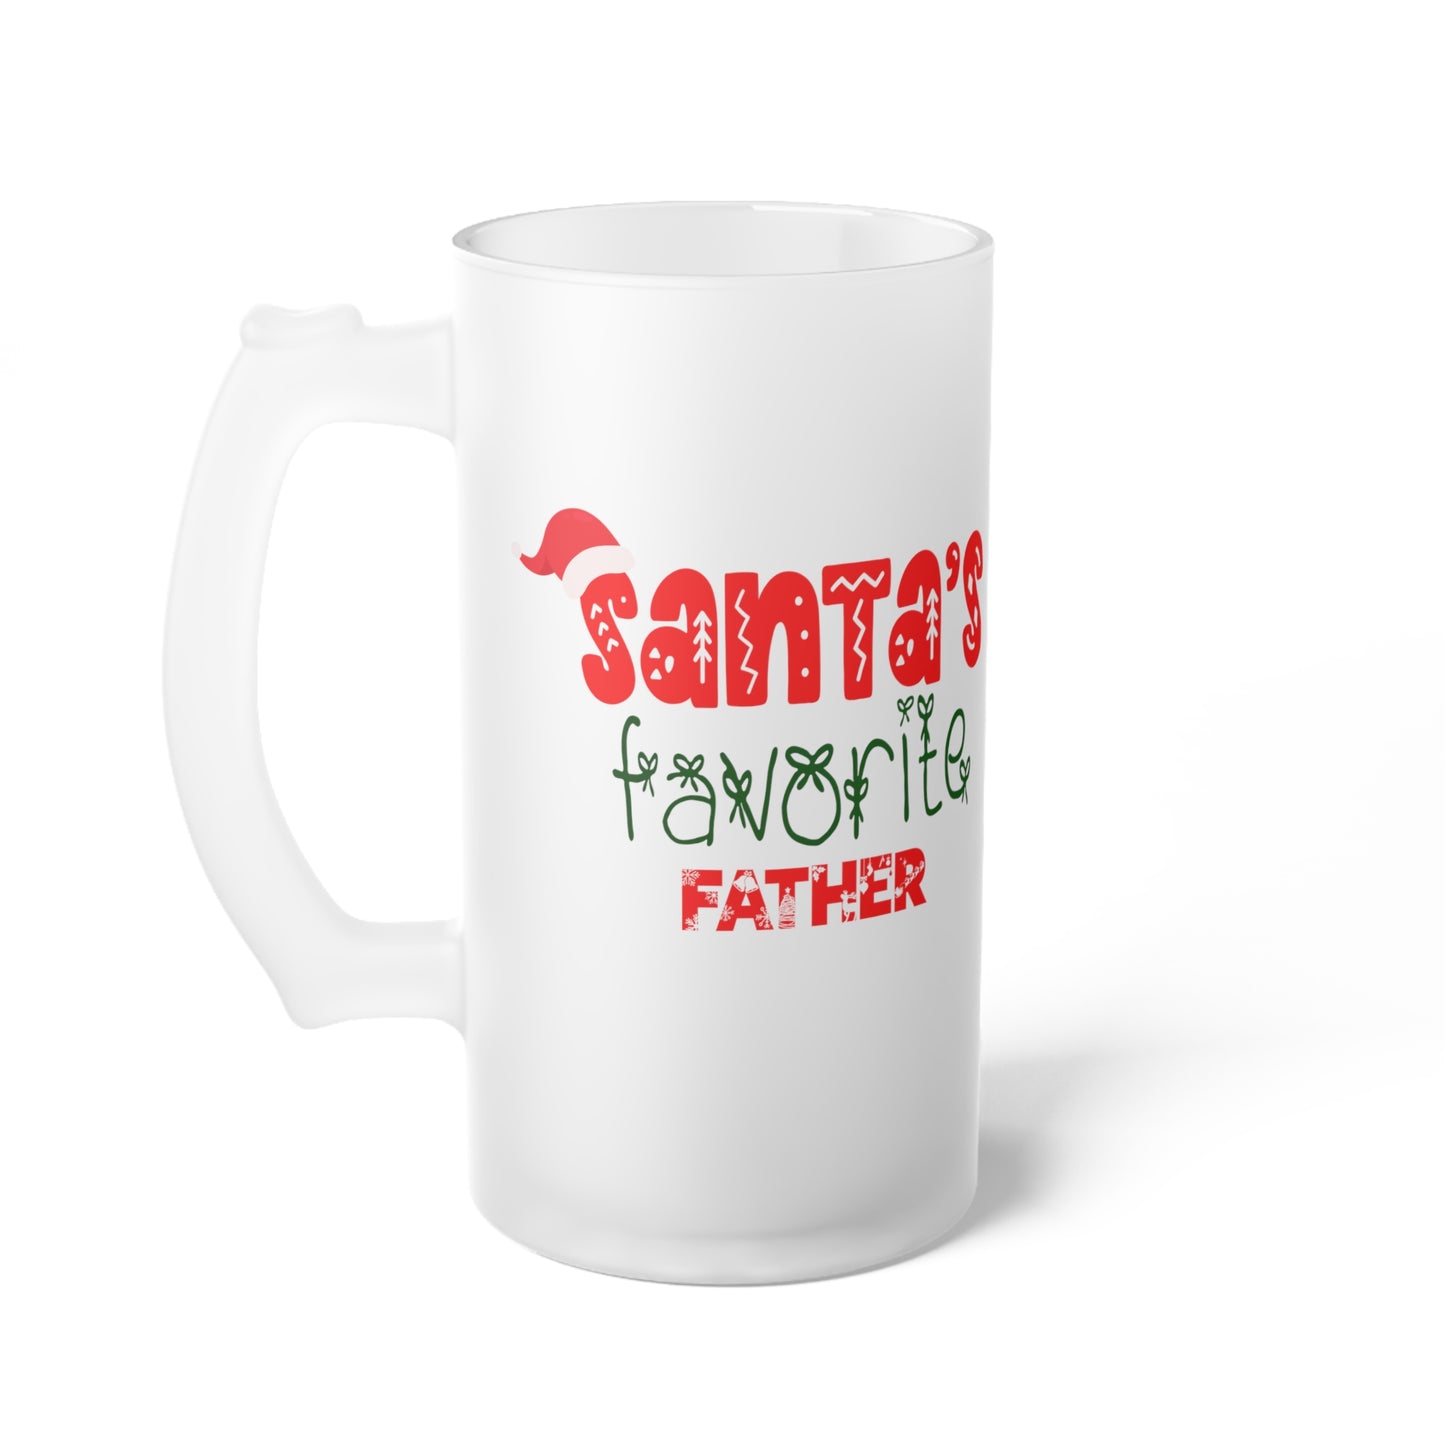 Santa's Favorite Father Frosted Glass Beer Mug